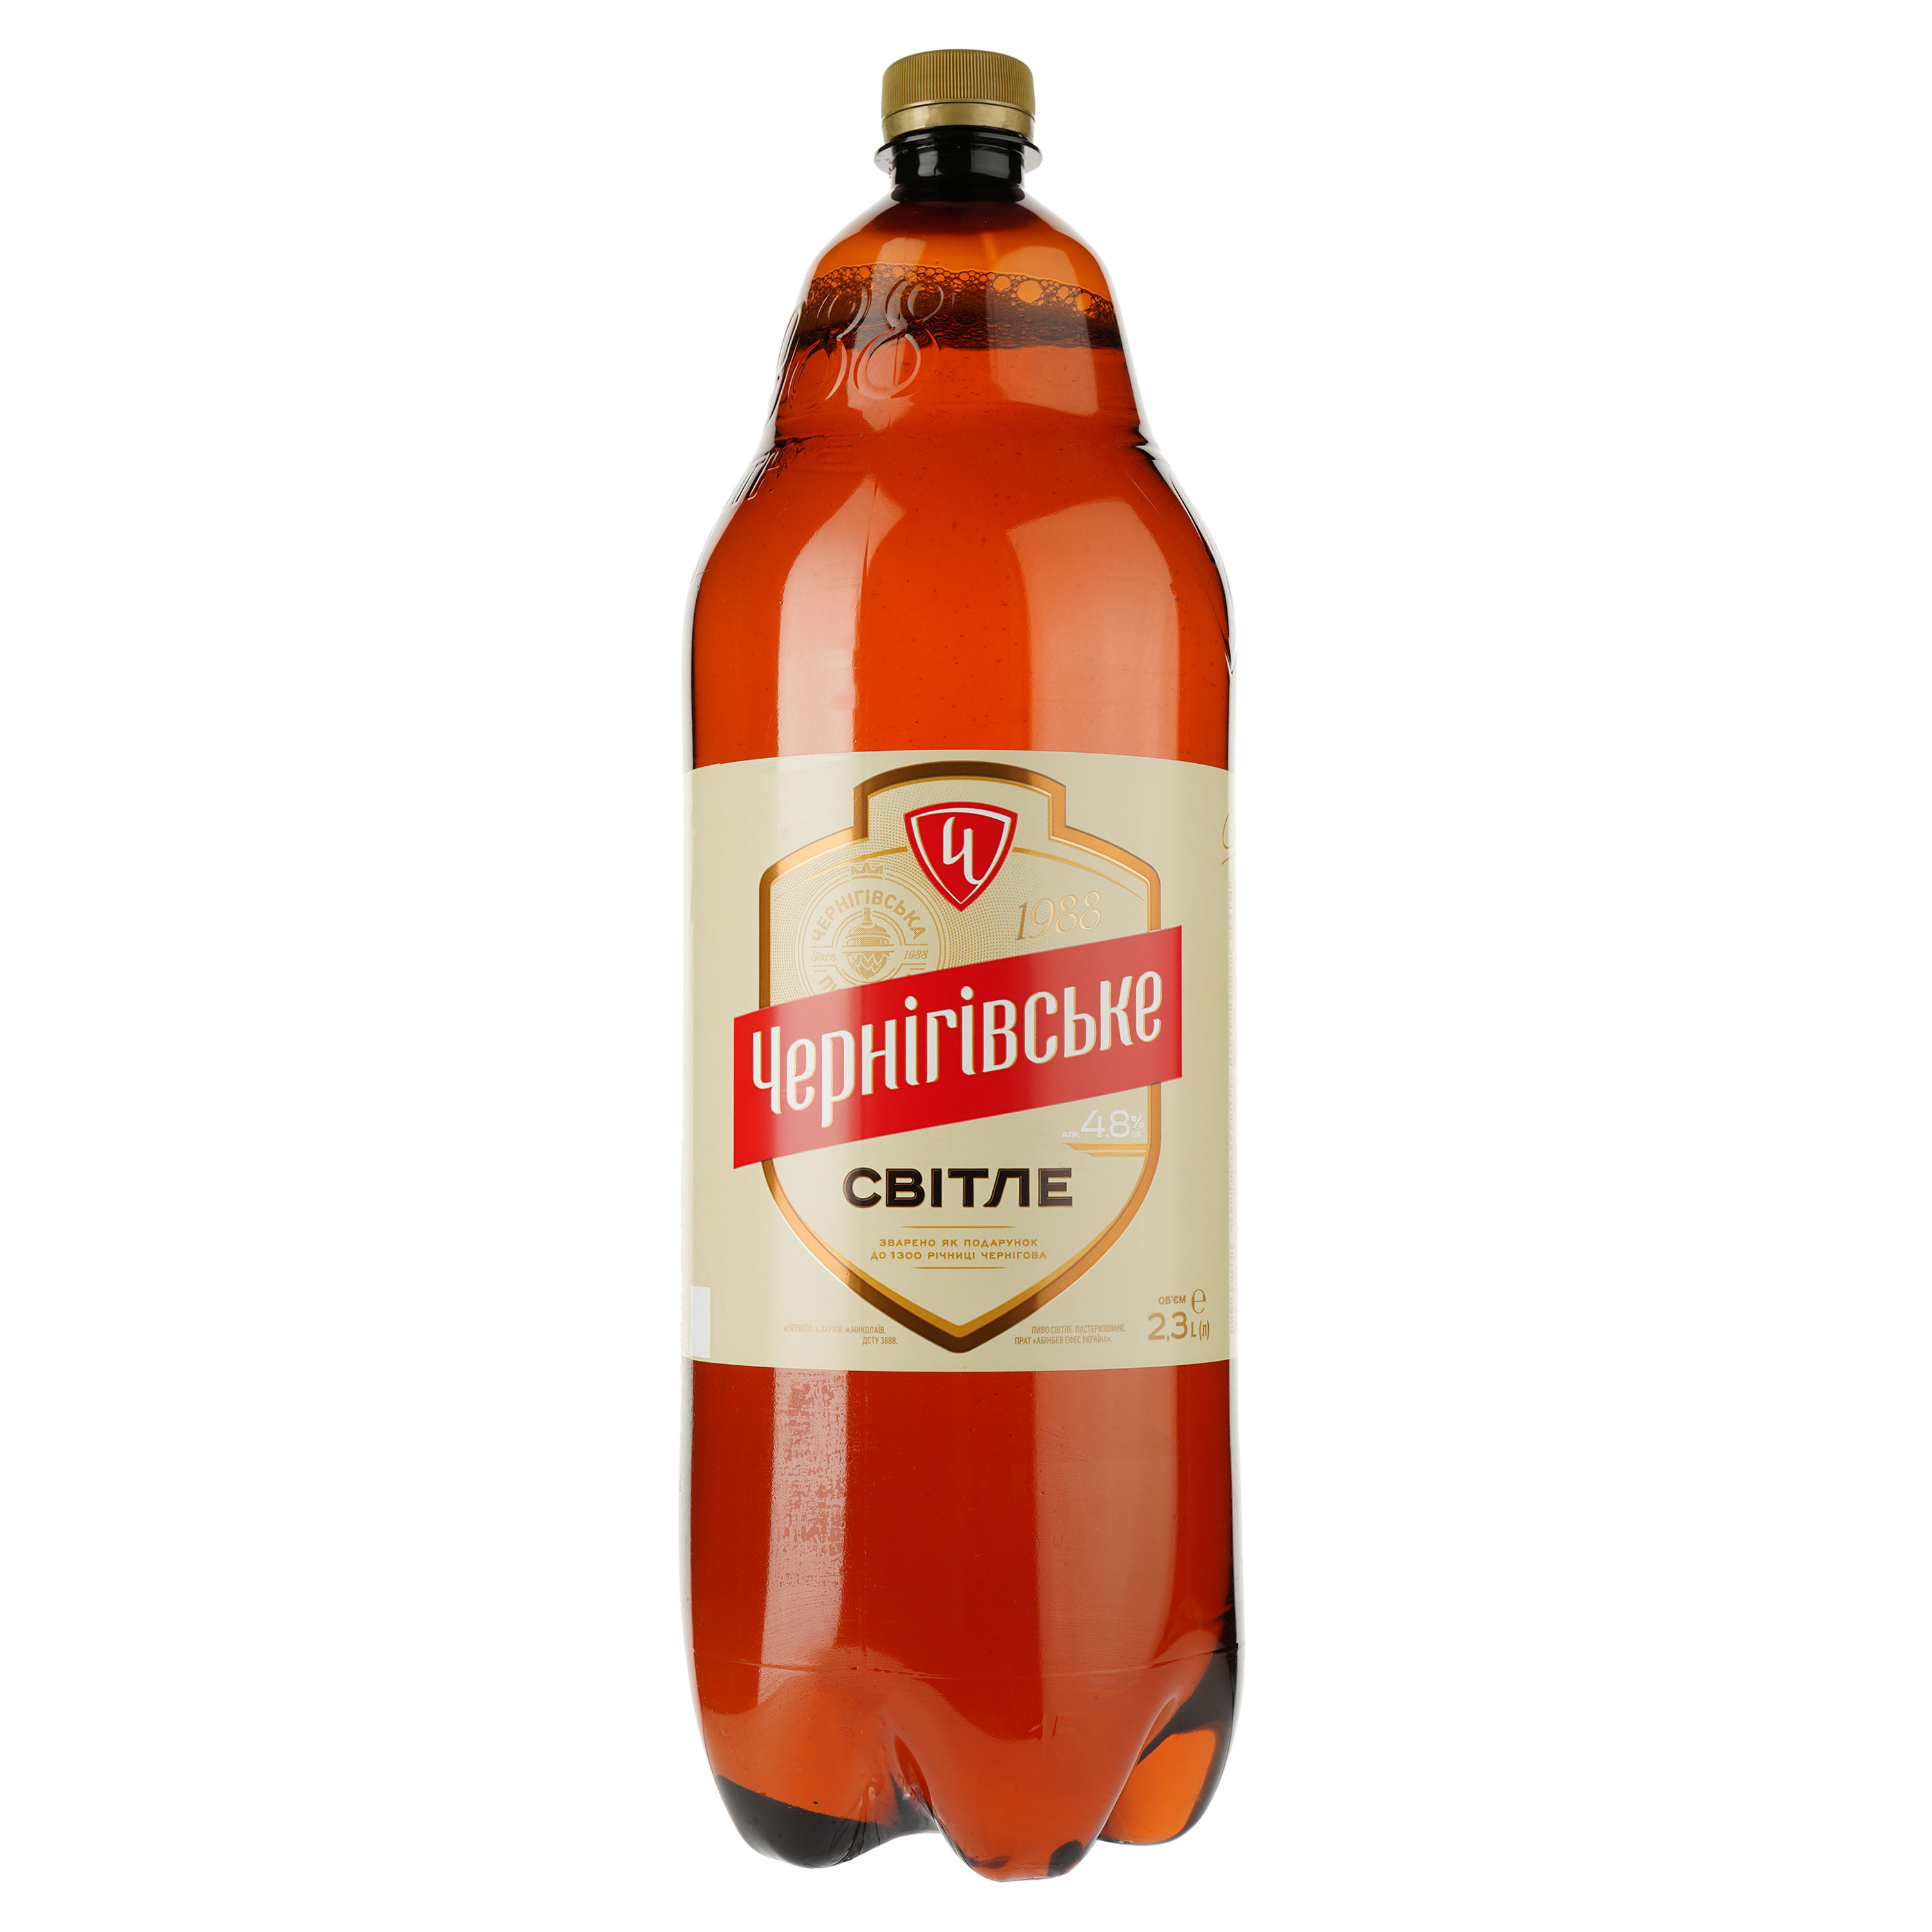 Пиво Чернігівське, светлое, 4,5%, 2,3 л (868305) - фото 1